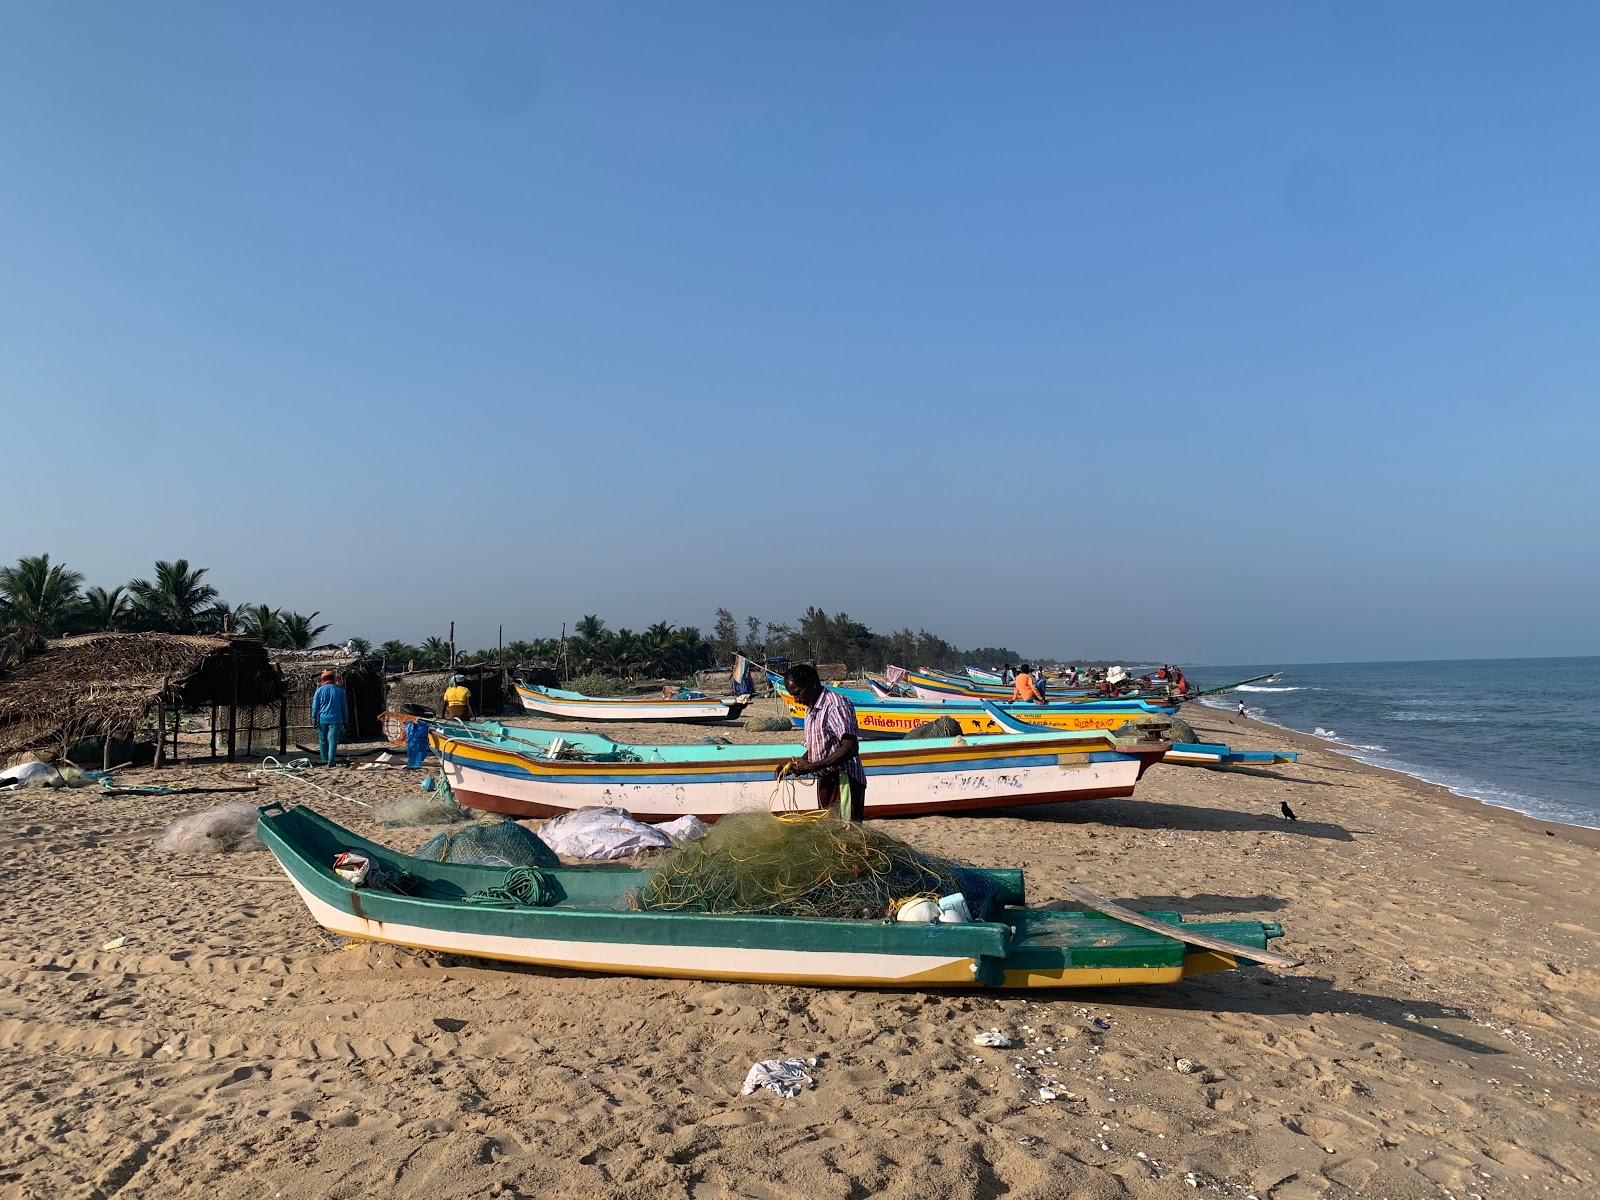 Fotografie cu Villupuram Beach cu nivelul de curățenie in medie